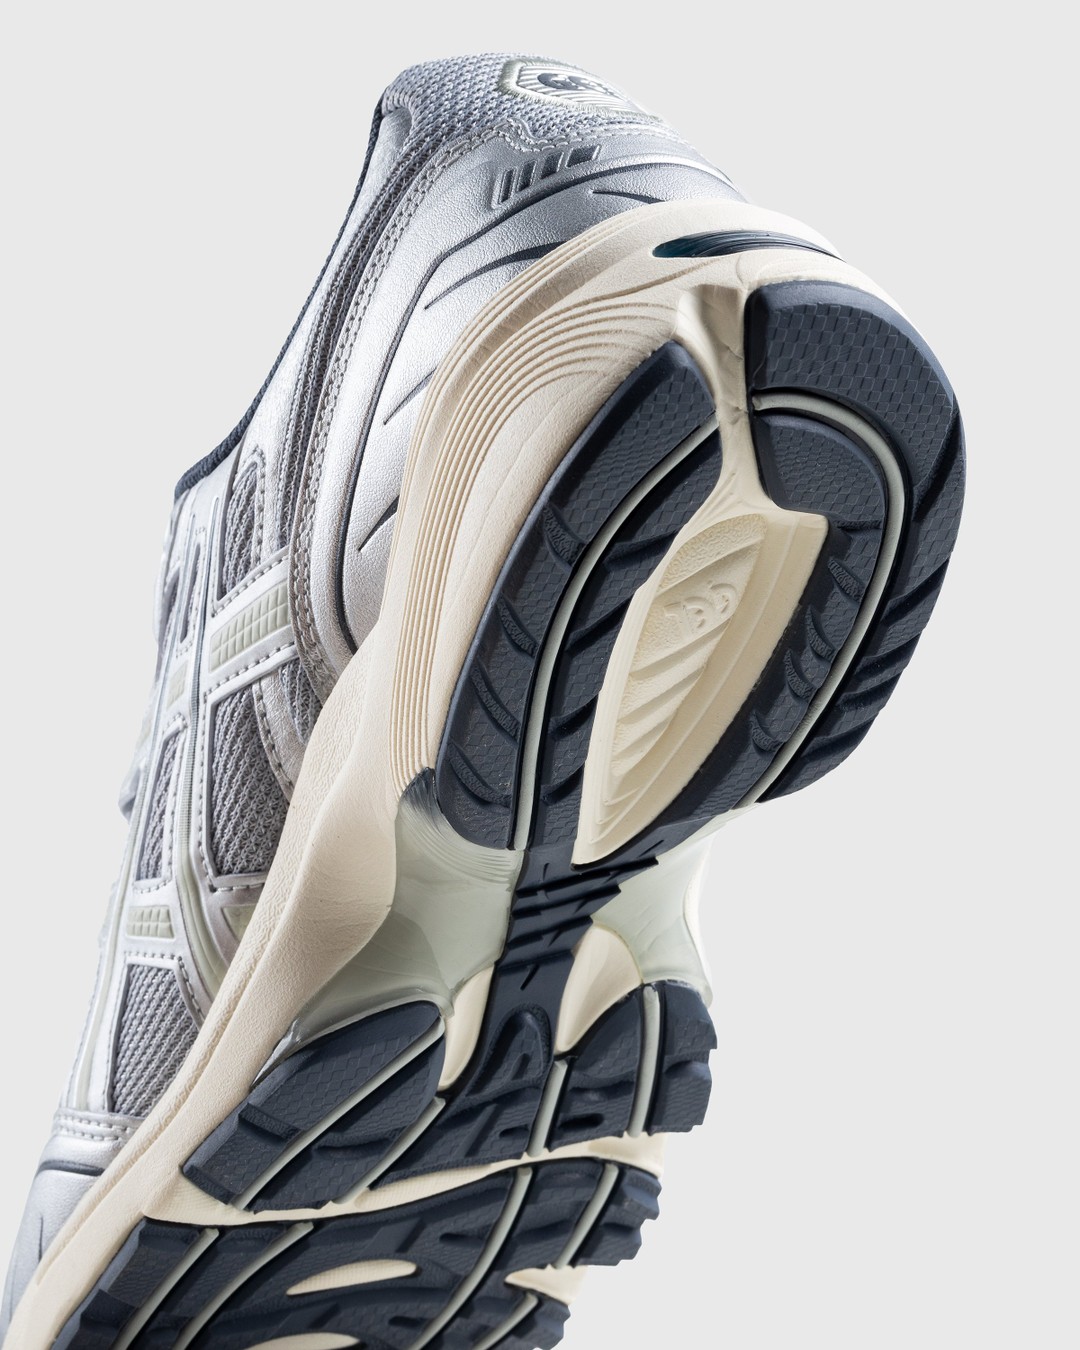 asics – GEL-1090 Piedmont Gray/Tarmac - Low Top Sneakers - Grey - Image 6